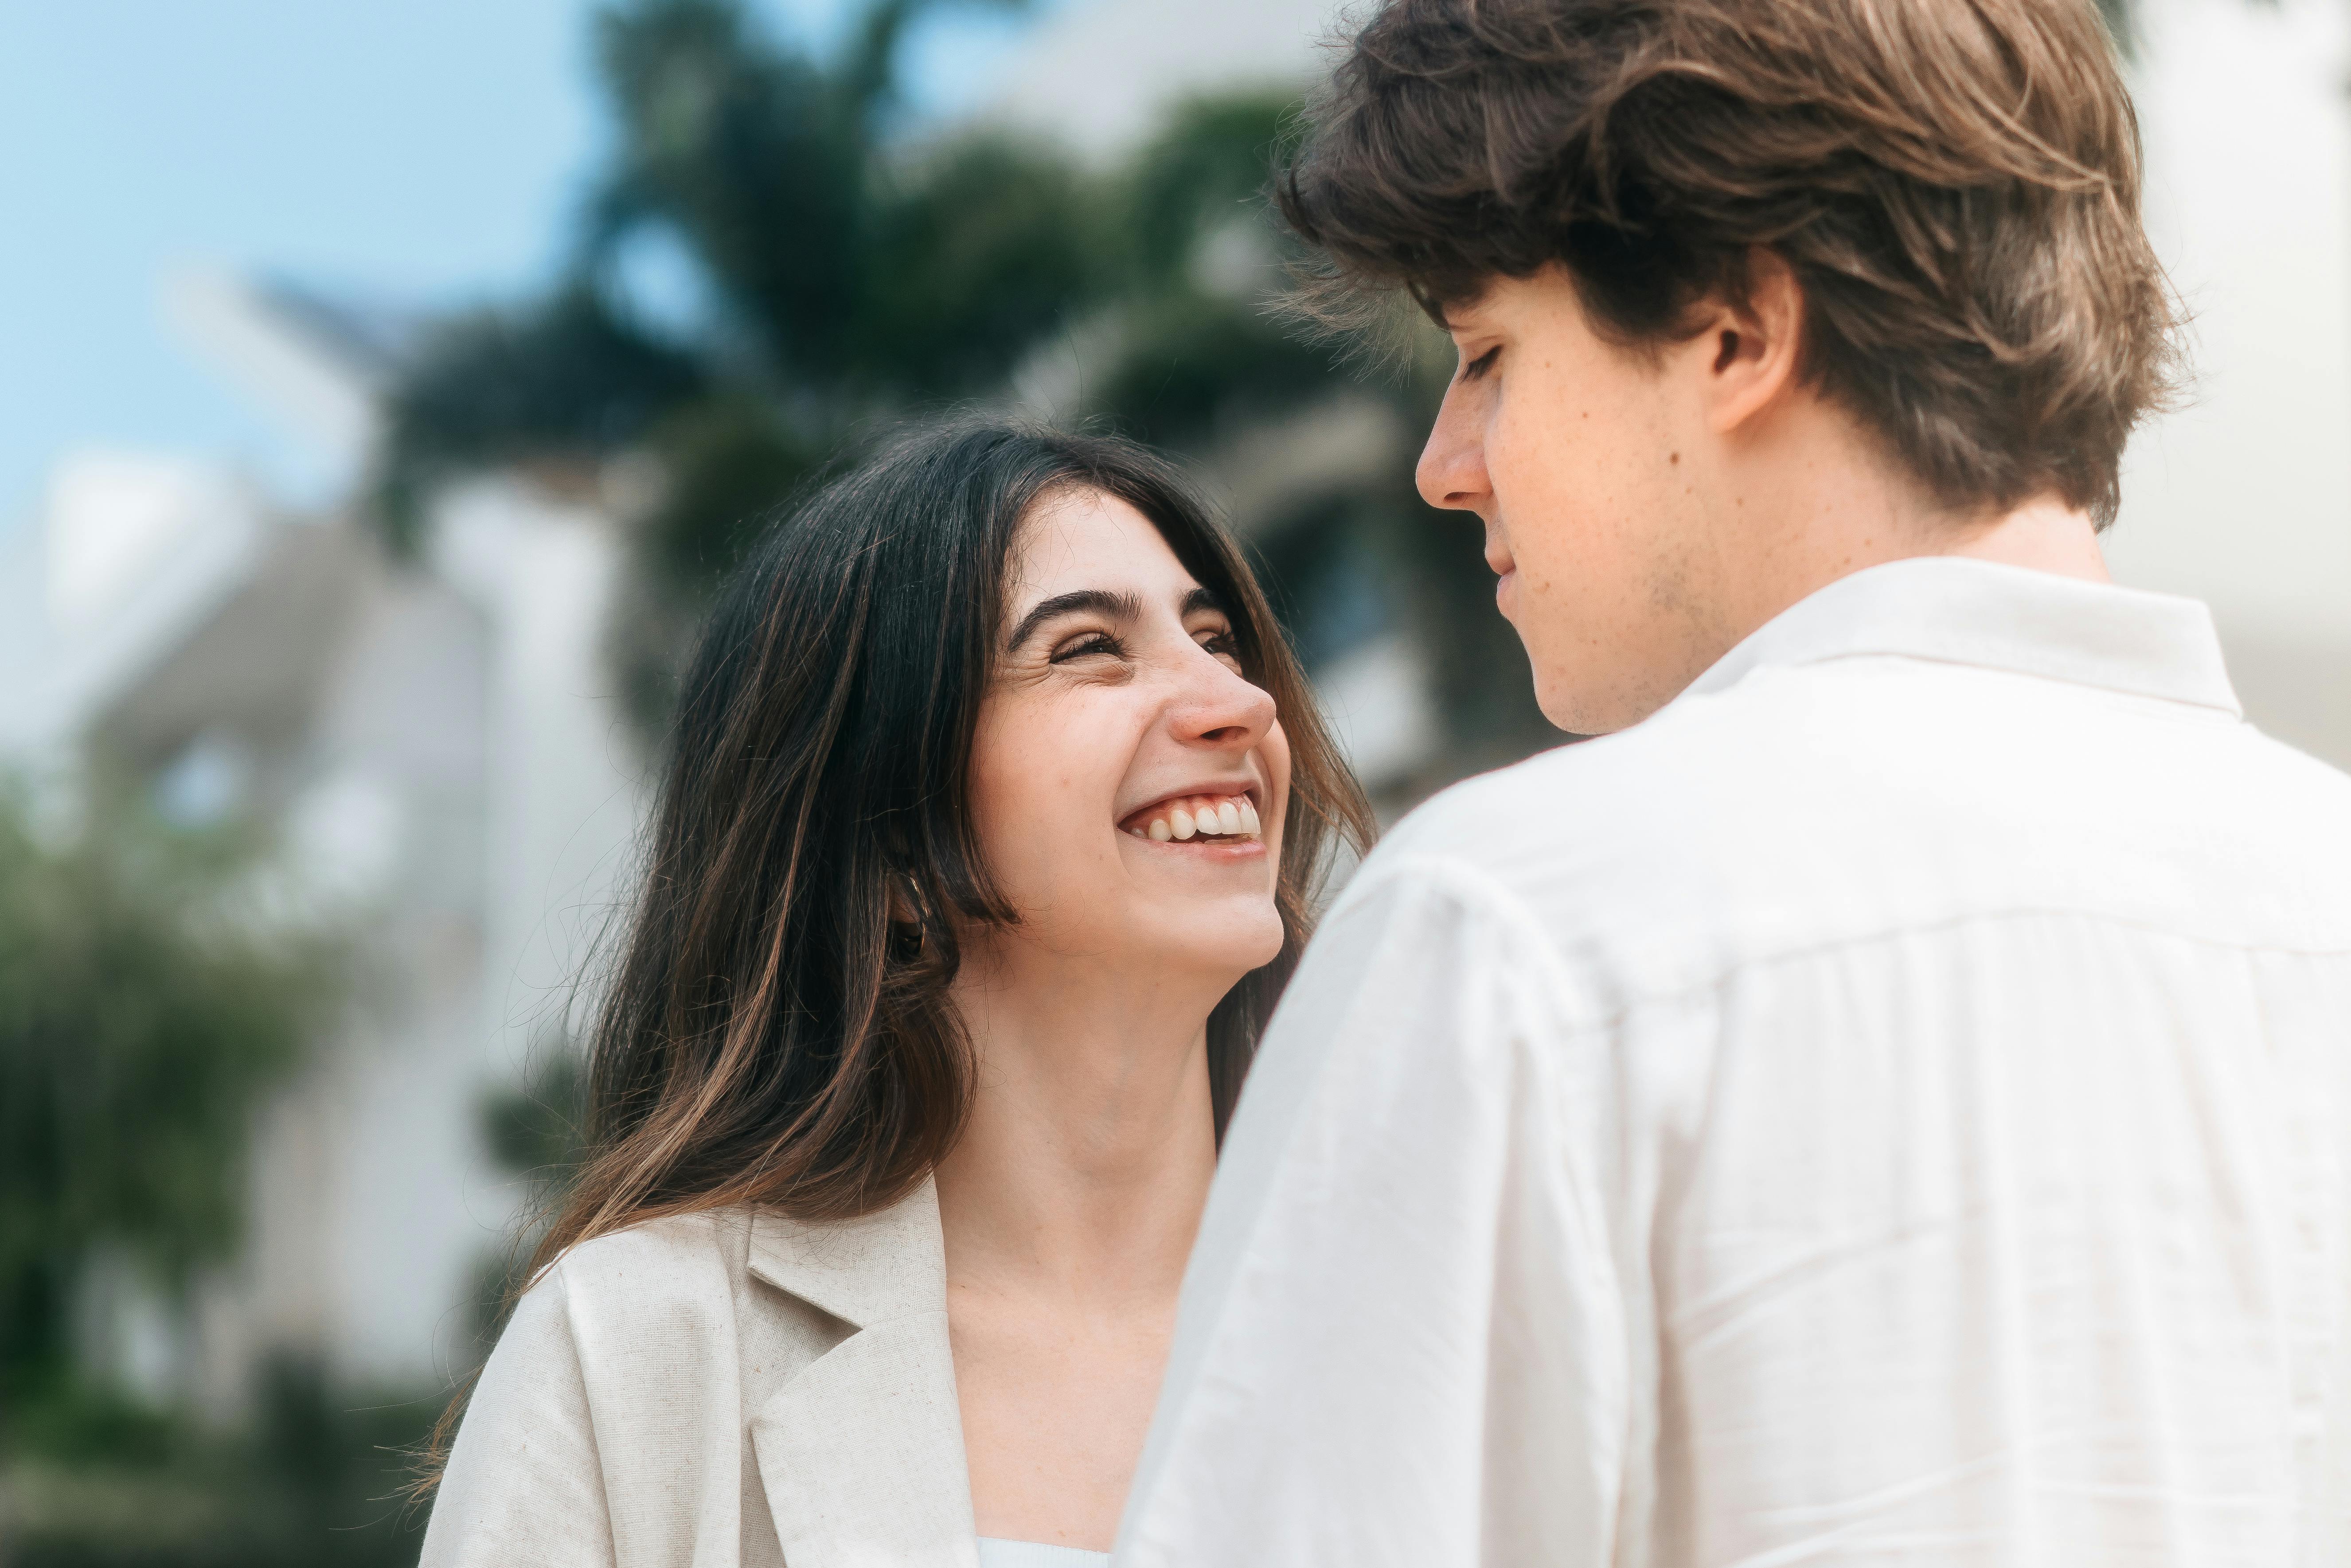 A happy couple talking | Source: Pexels